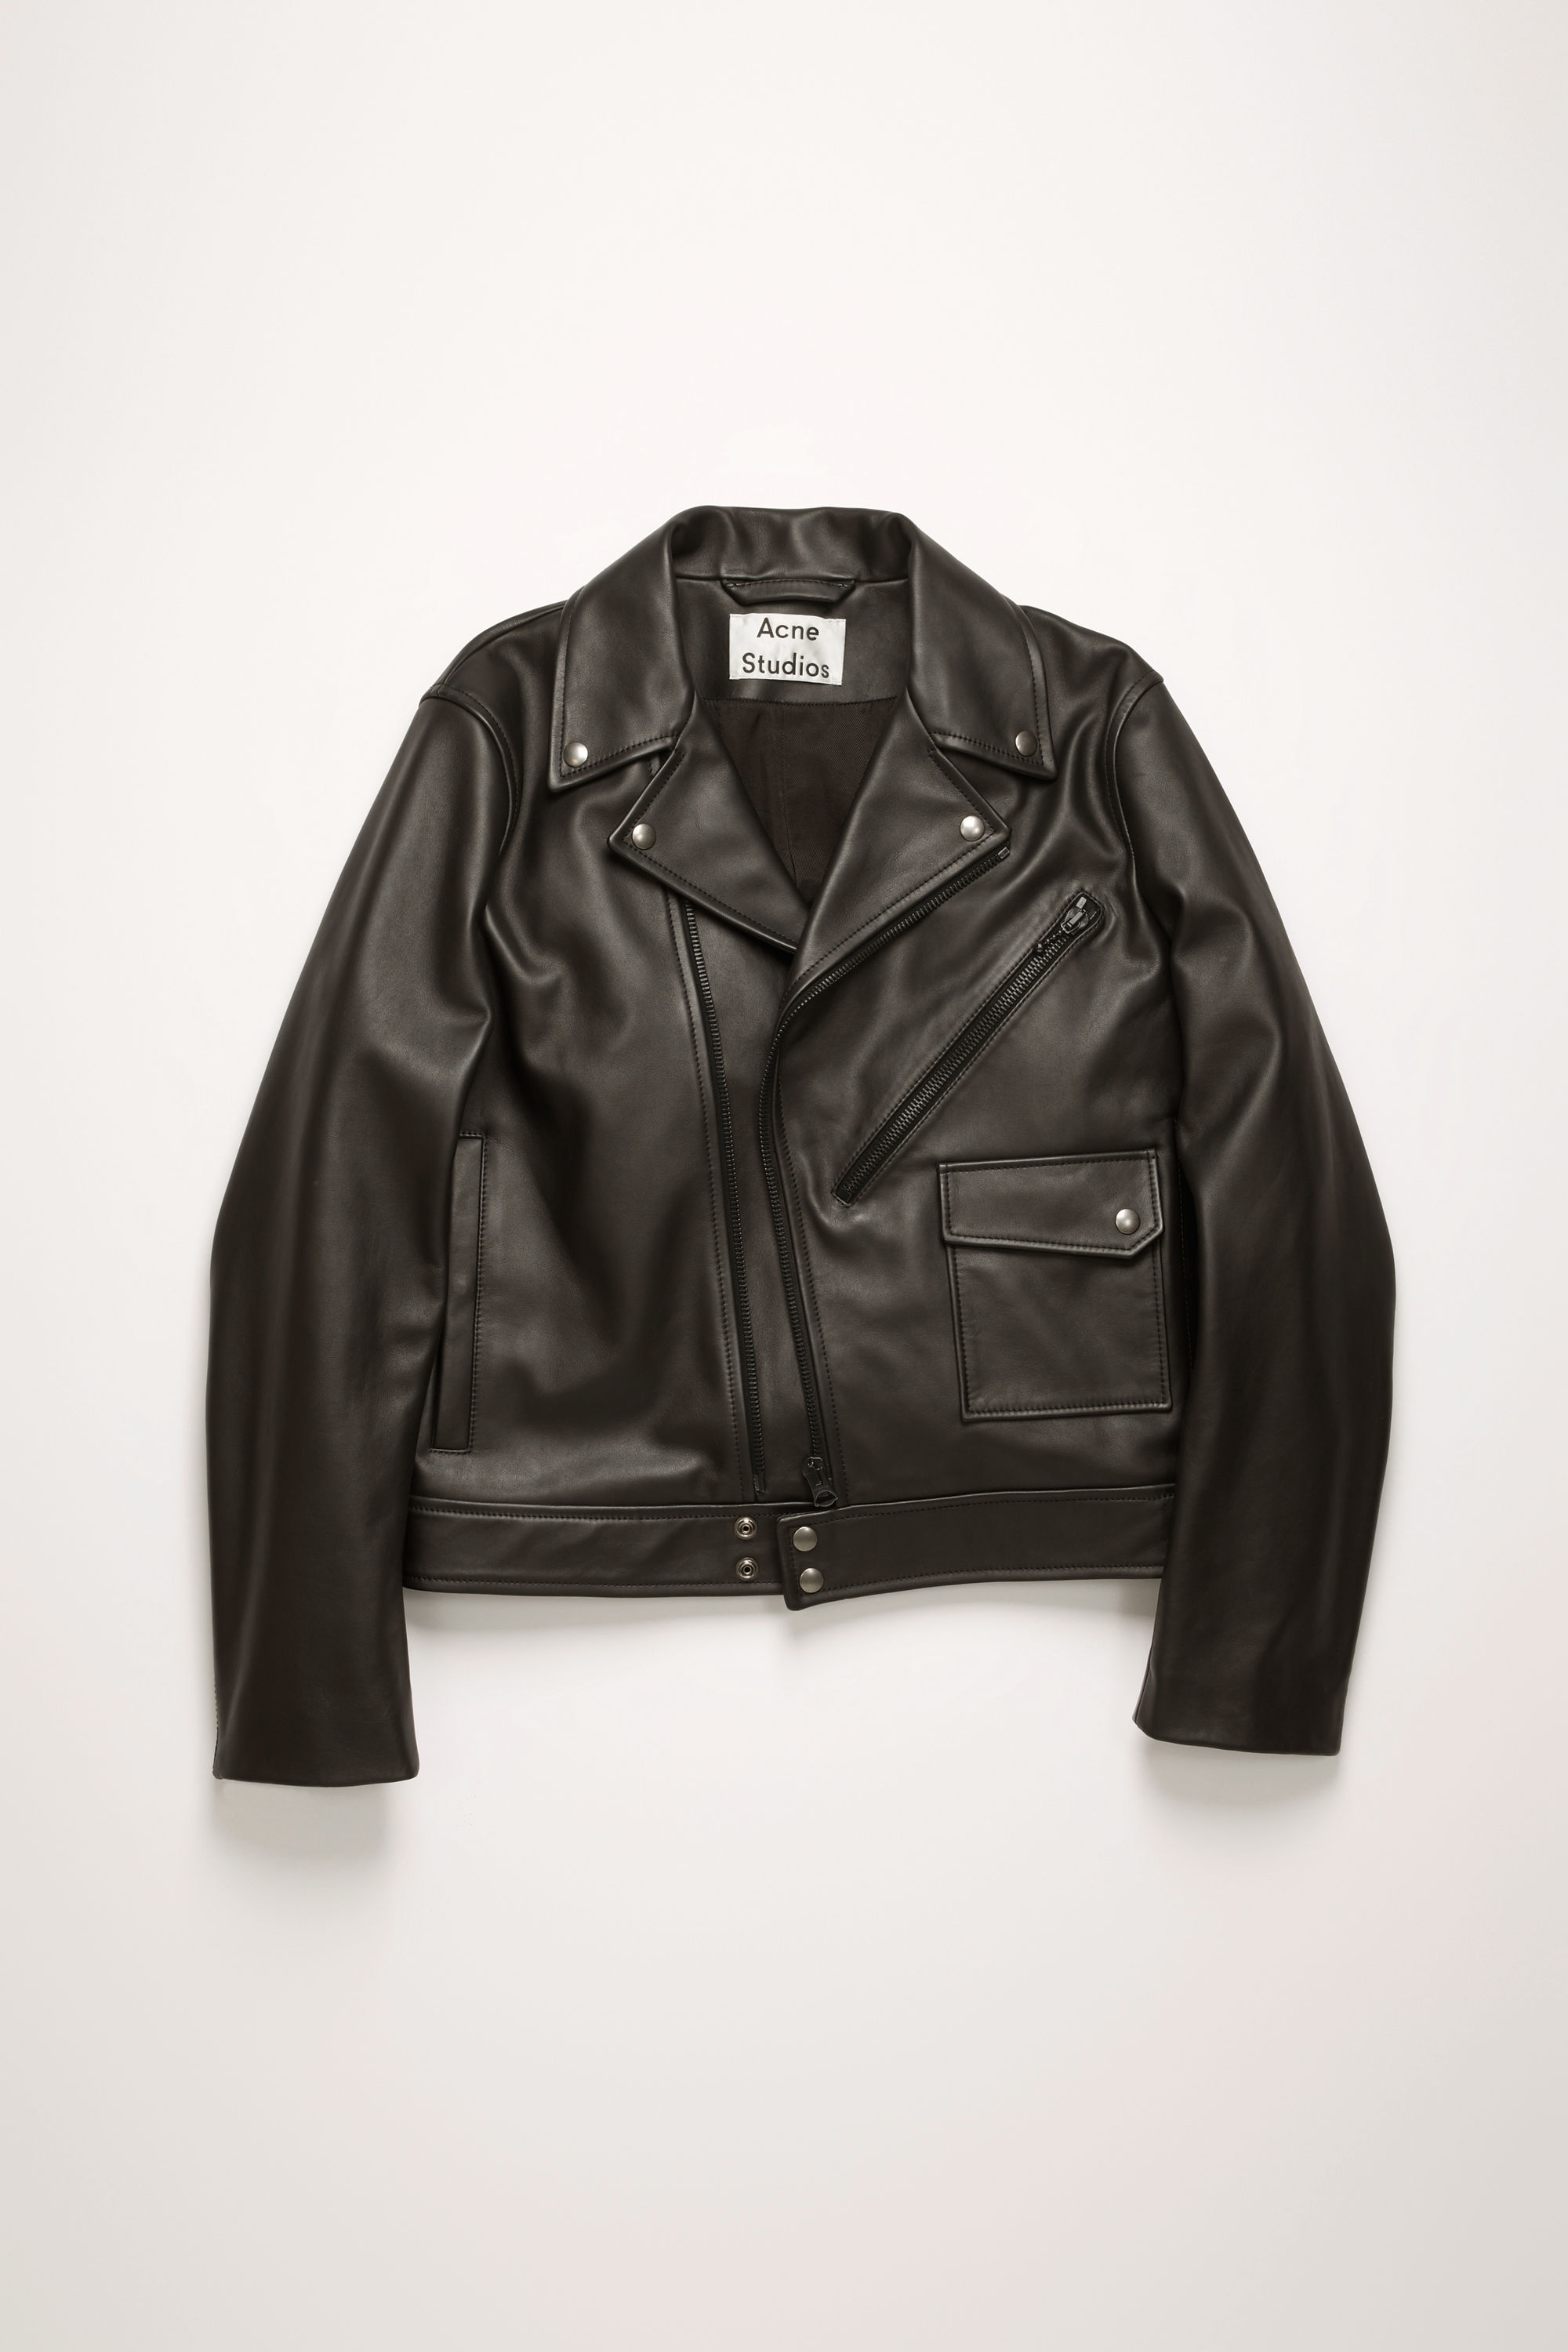 acne leather jacket sale